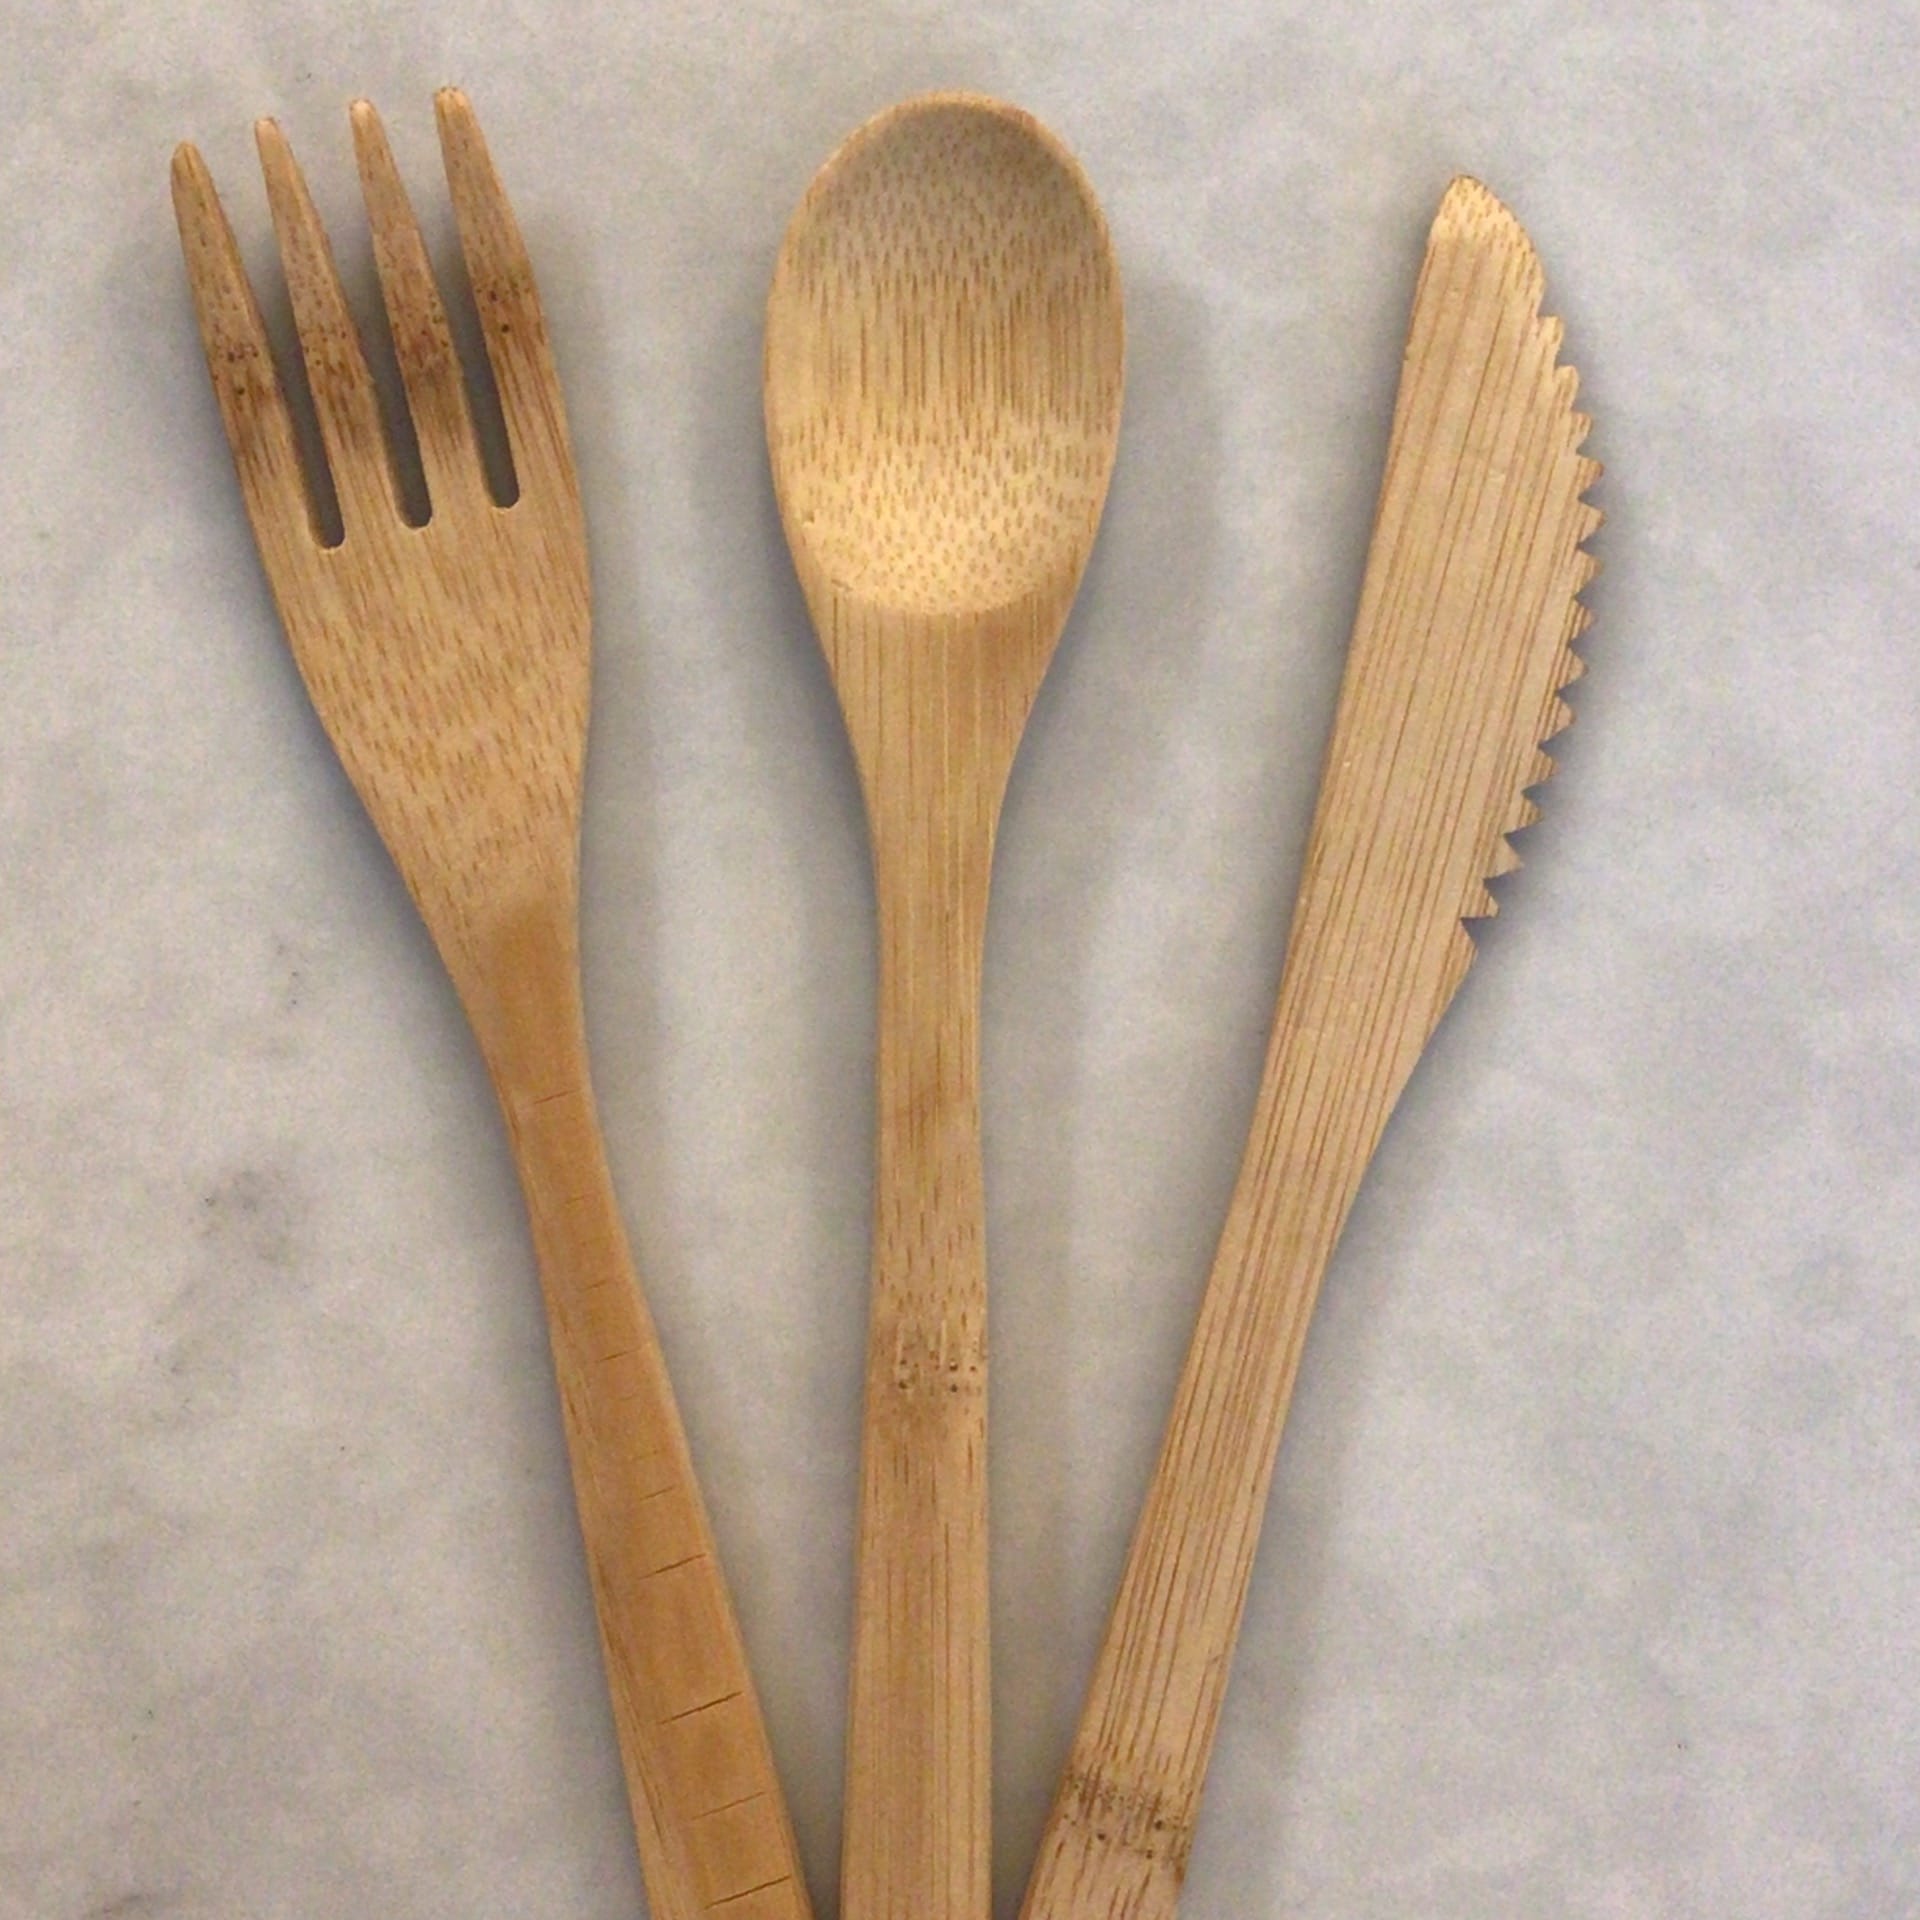 Bamboo Spoon Set